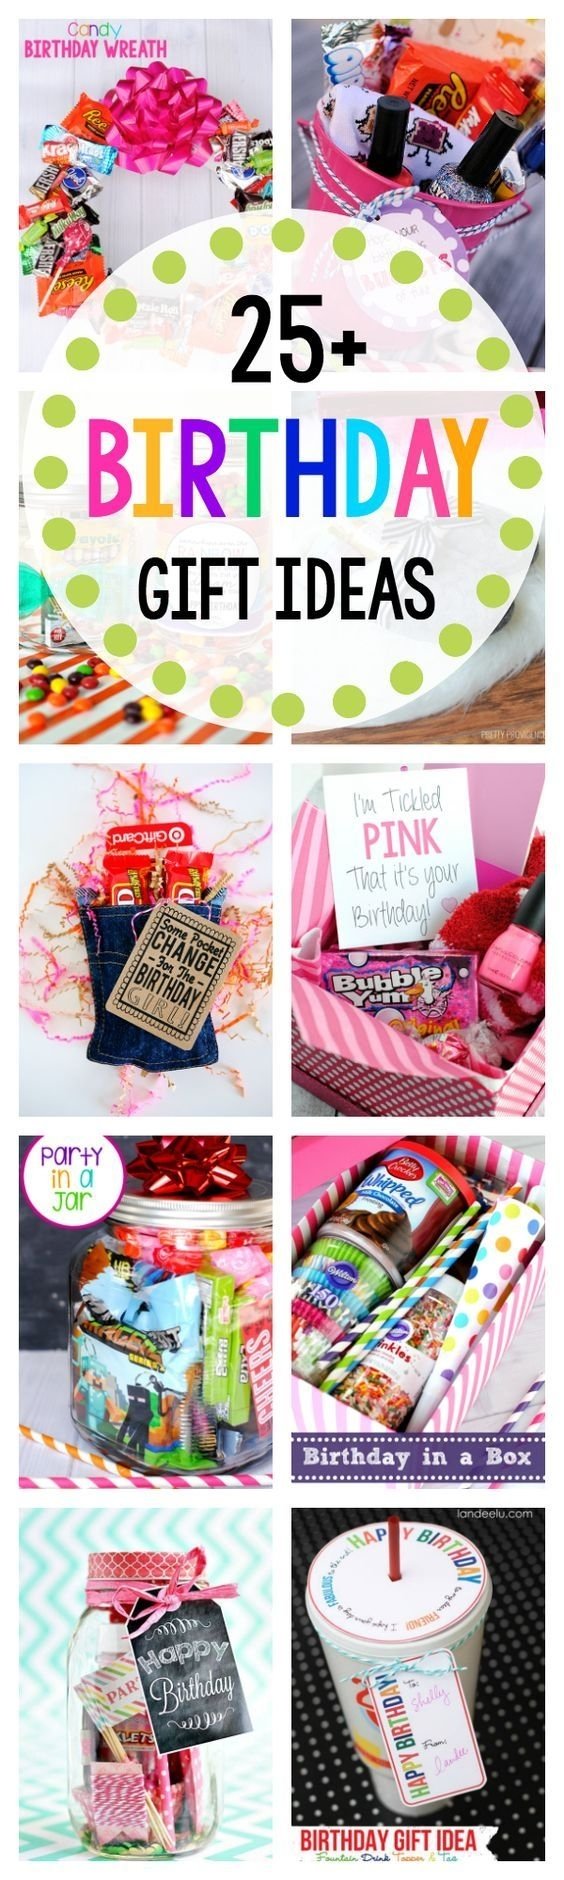 10 Amazing Birthday Gift Ideas For Friend 25 fun birthday gifts ideas for friends cadeau emballage et 2022